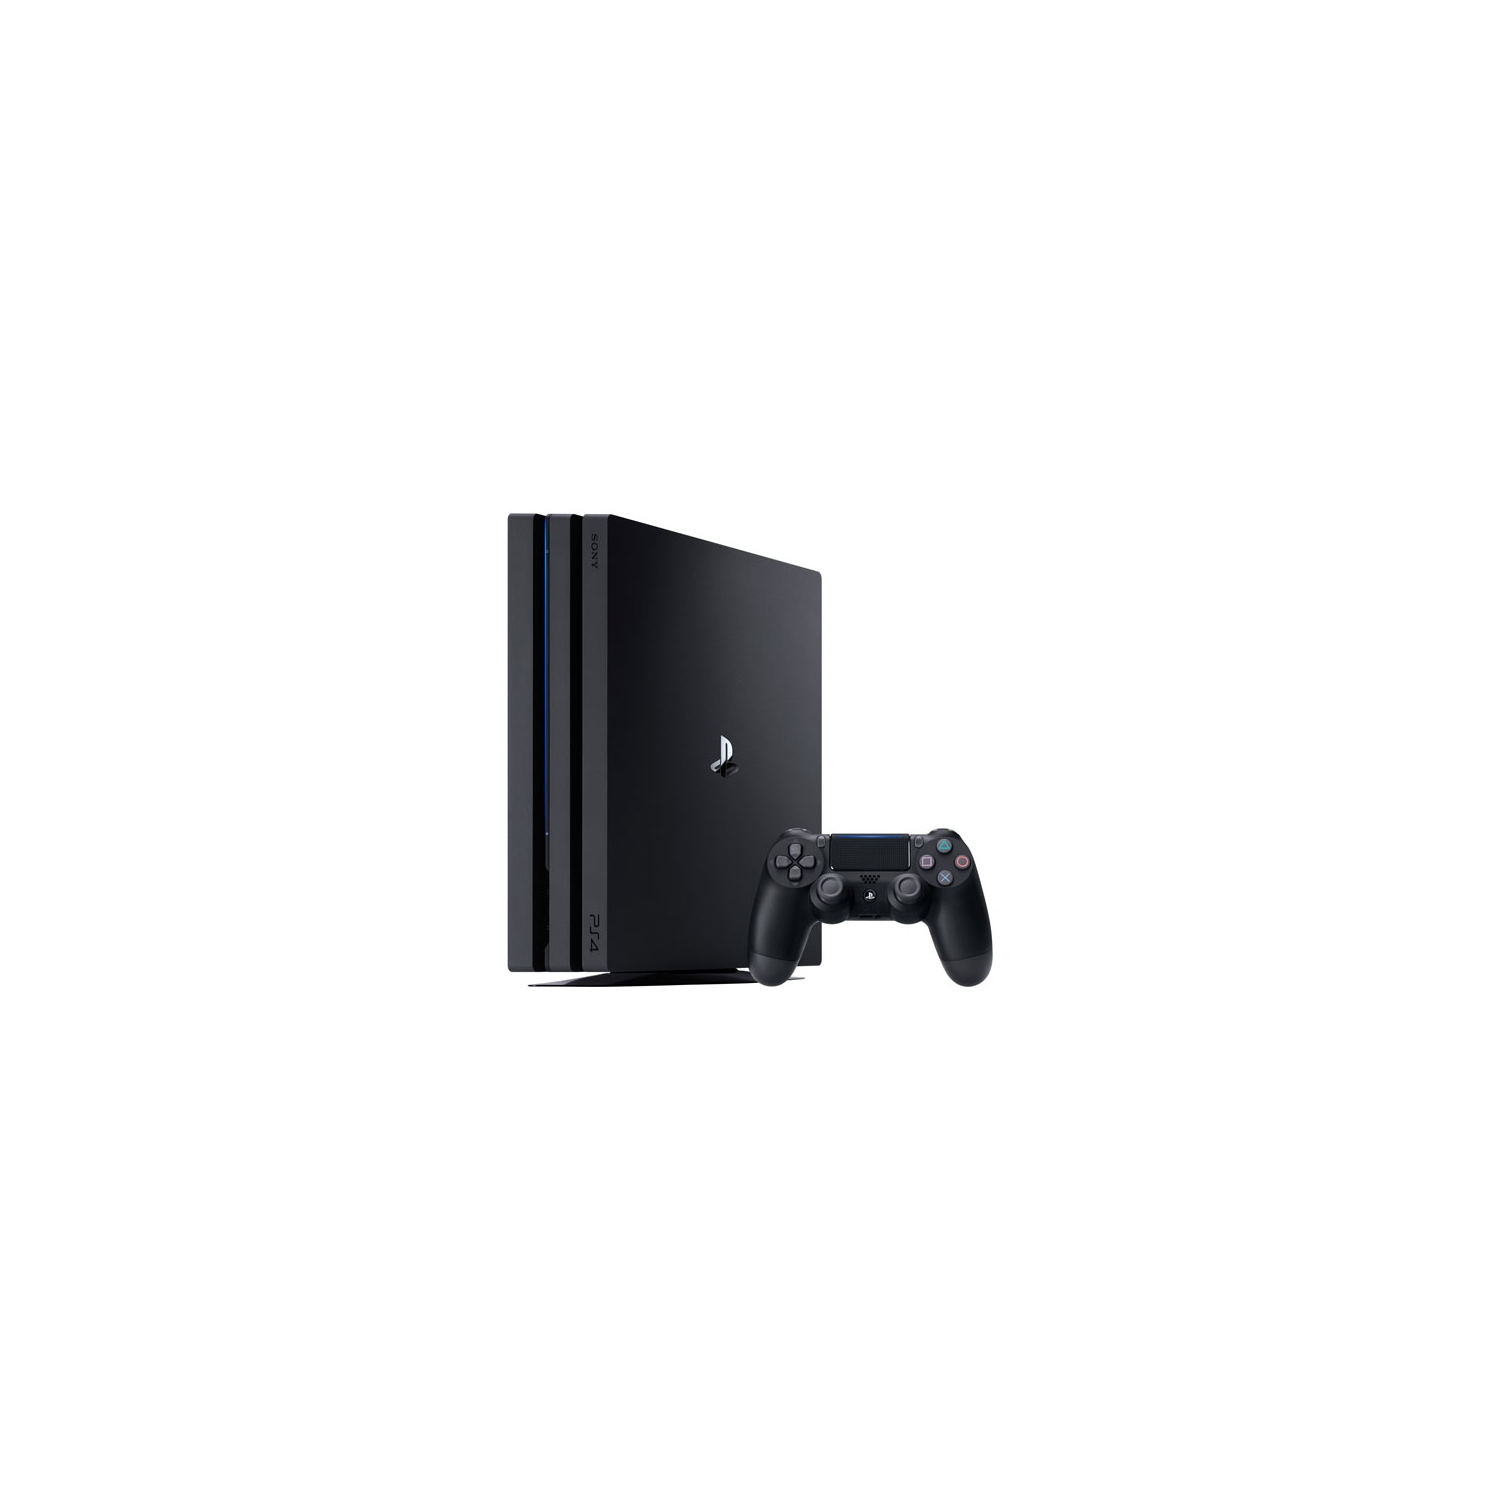 Refurbished (Good) - PlayStation 4 Pro 1TB Console